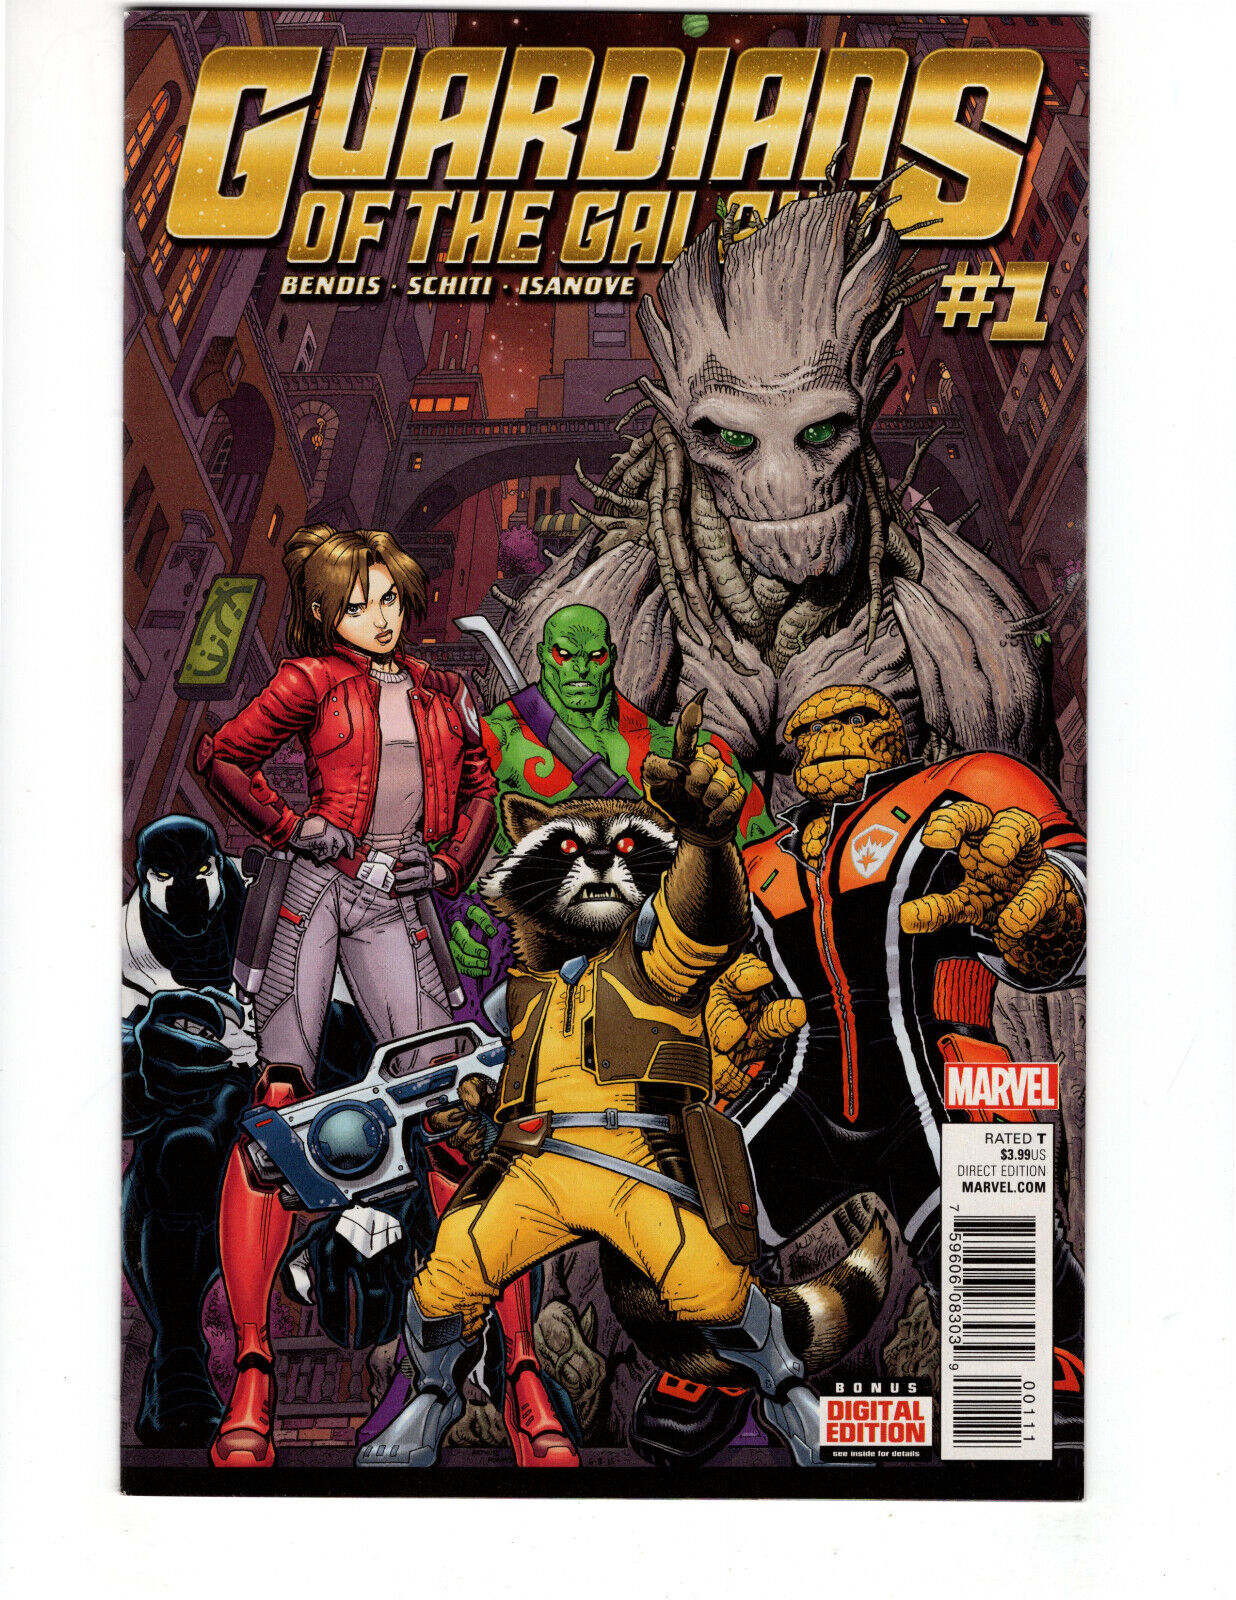 Guardians Of The Galaxy #1 (2015 Marvel Comics) - Arthur Adams Cover VF/NM